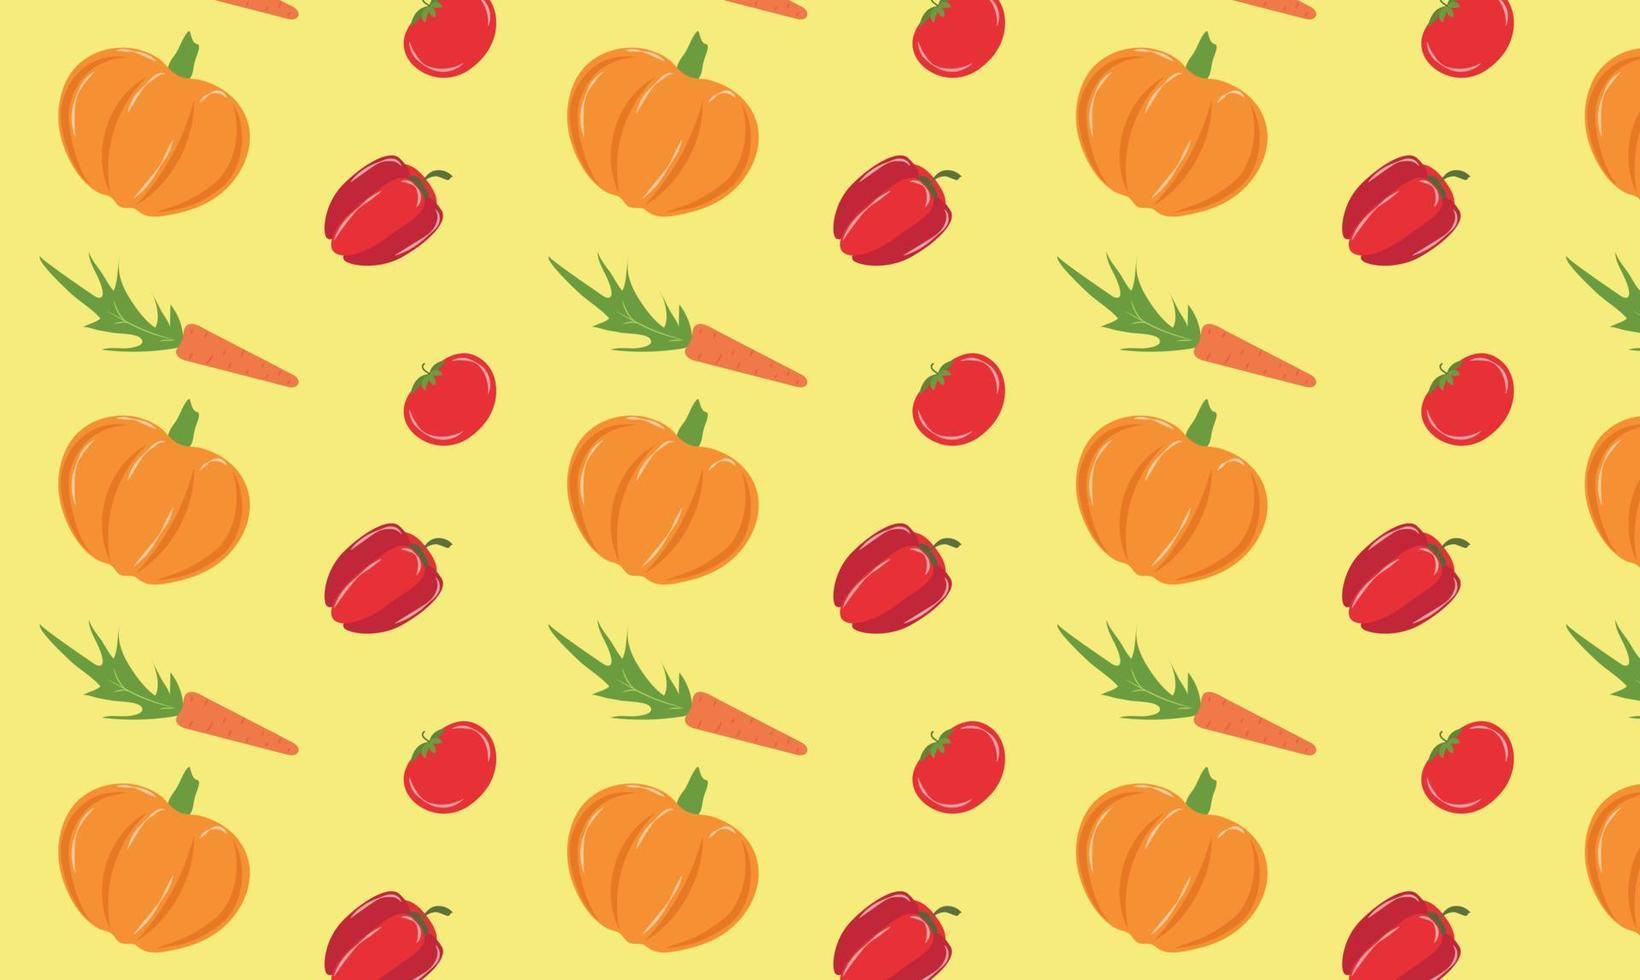 vegetable pattern with pumpkins vector